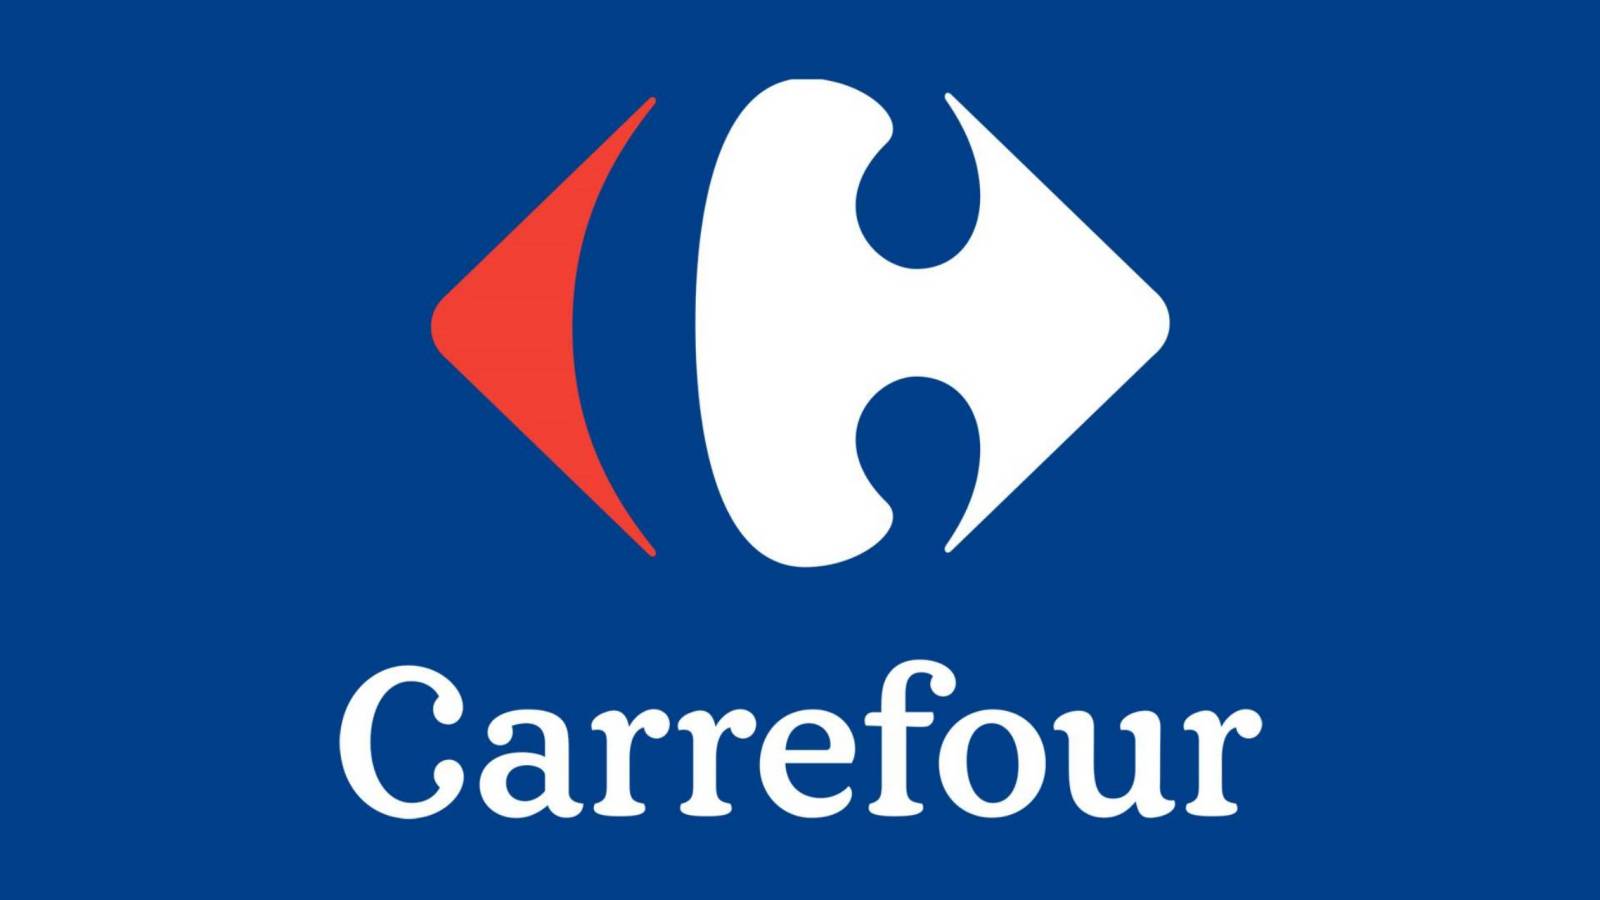 Carrefour kort